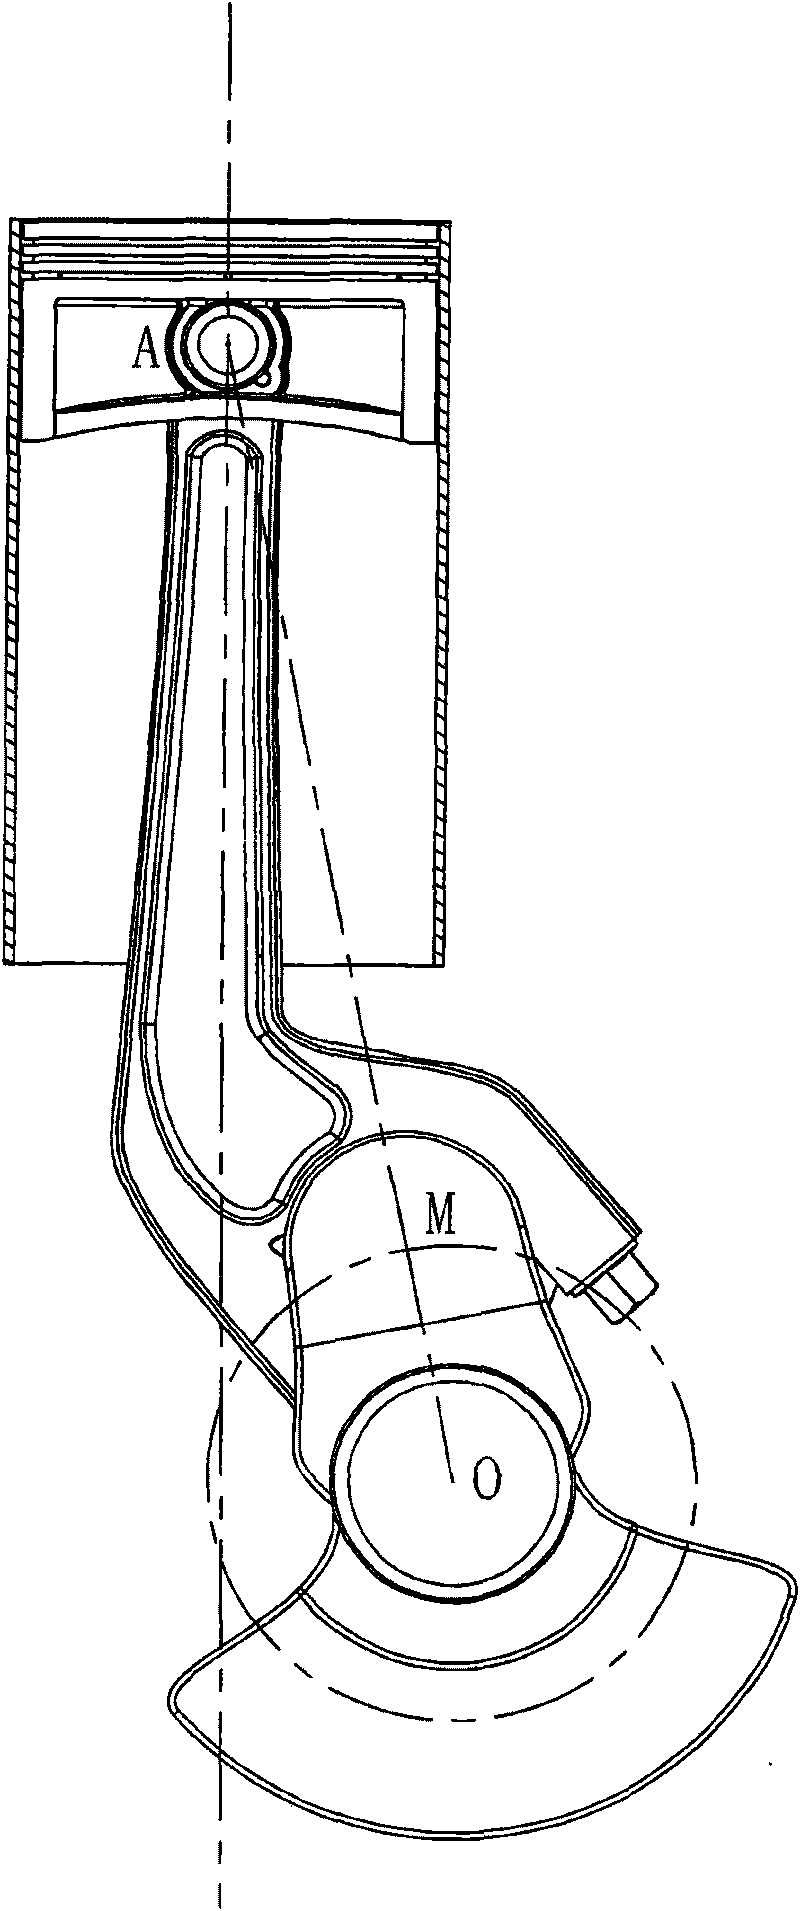 Bent connecting rod offset bent shaft mechanism and bent connecting rod offset bent shaft motor